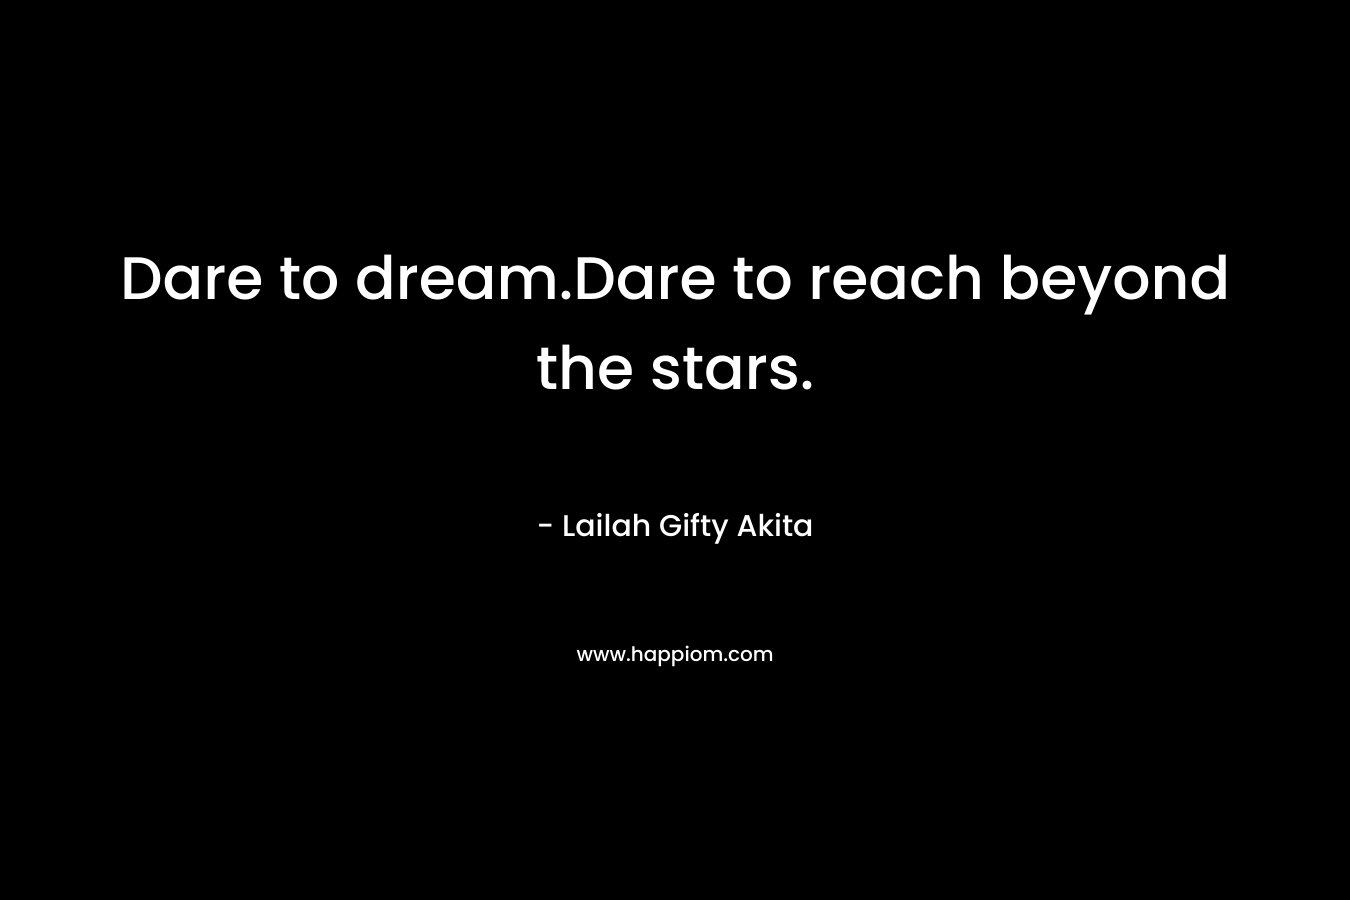 Dare to dream.Dare to reach beyond the stars.